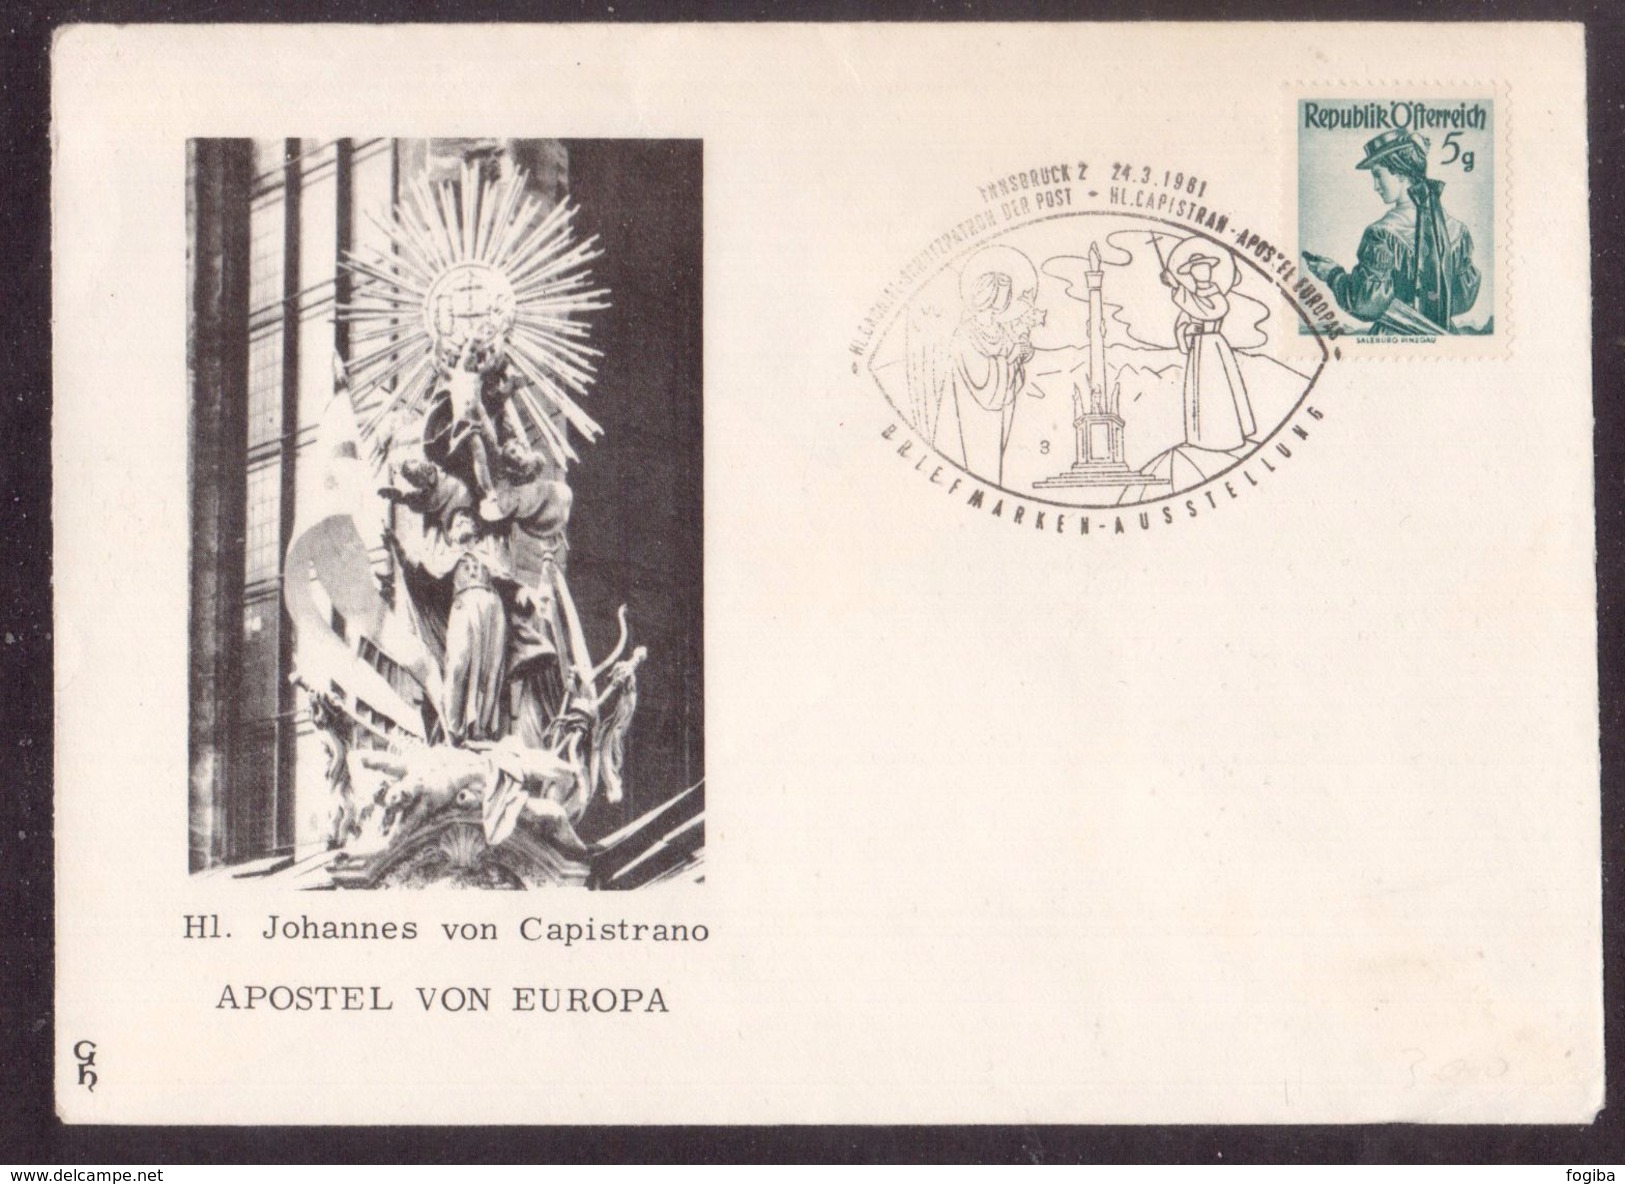 JZ239   Austria, Innsbruck 1961, Hl. Johannes Von Capistrano Apostel Von Europa - Special Cover And Postmark - Cristianesimo